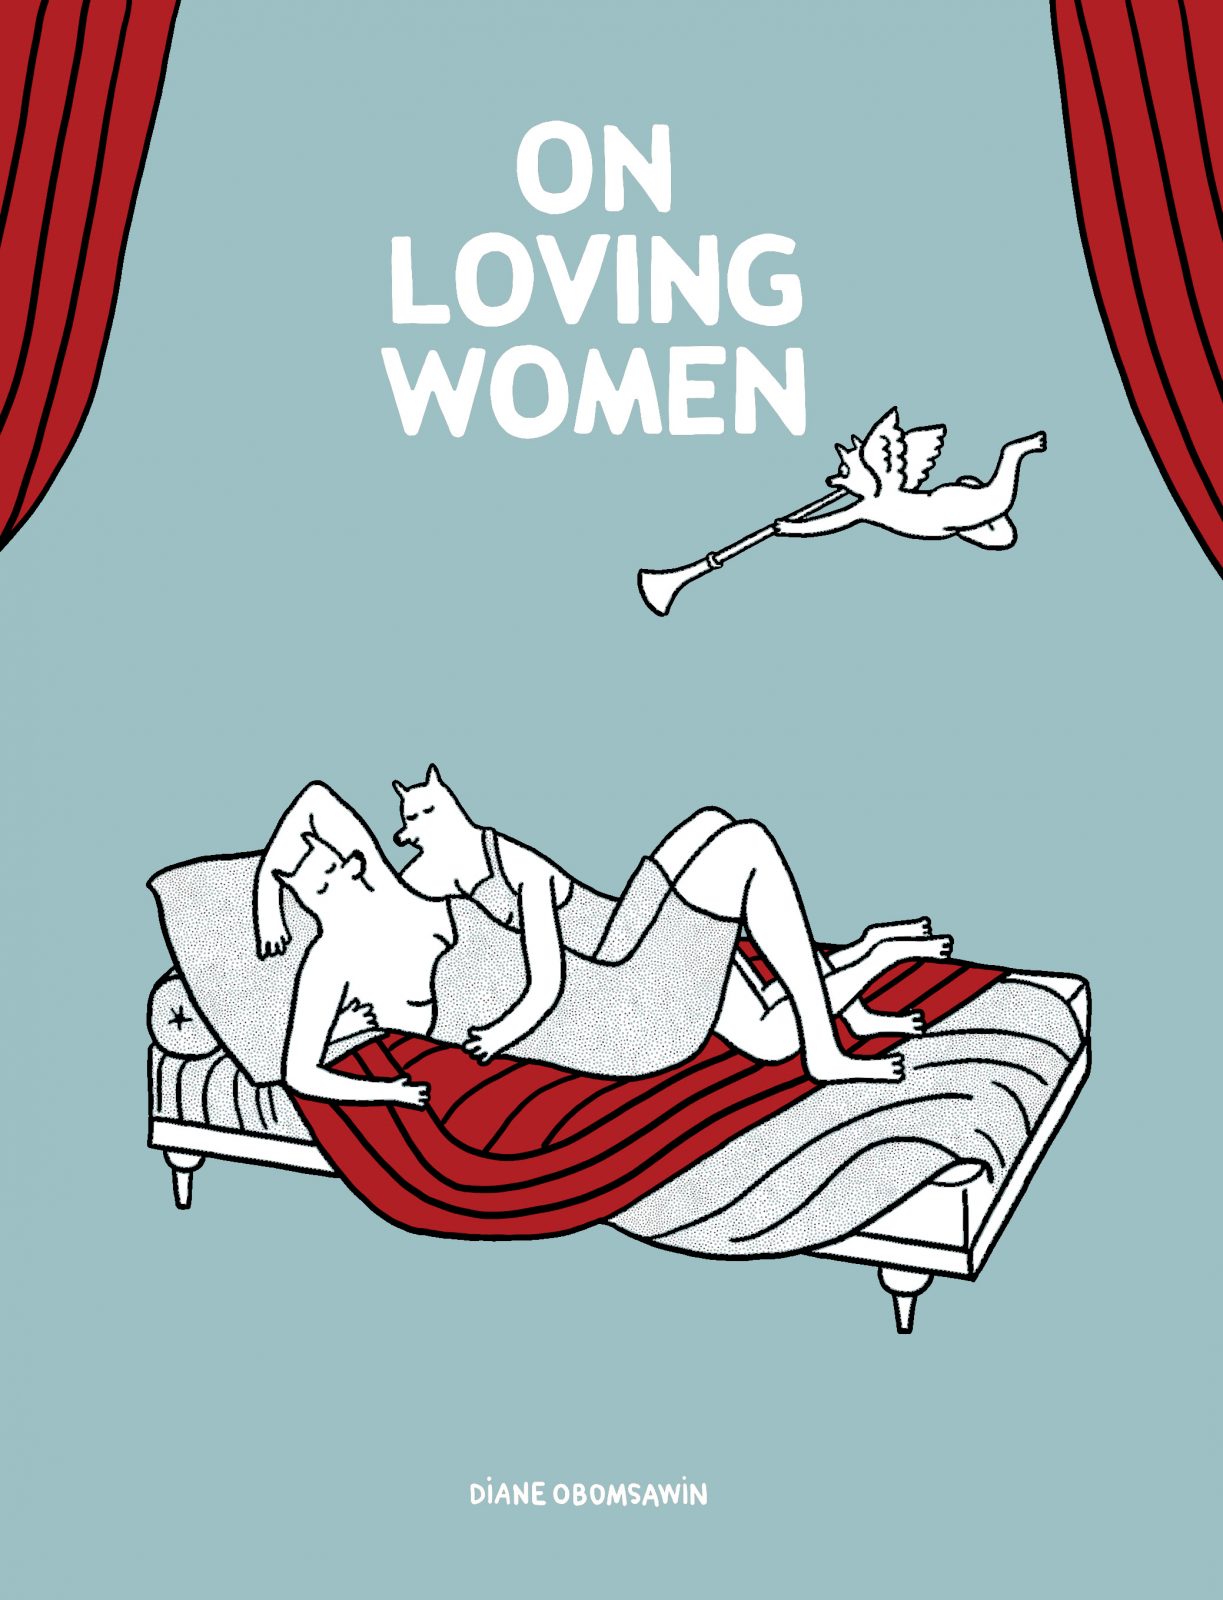 On Loving Women, by Diane Obomsawin